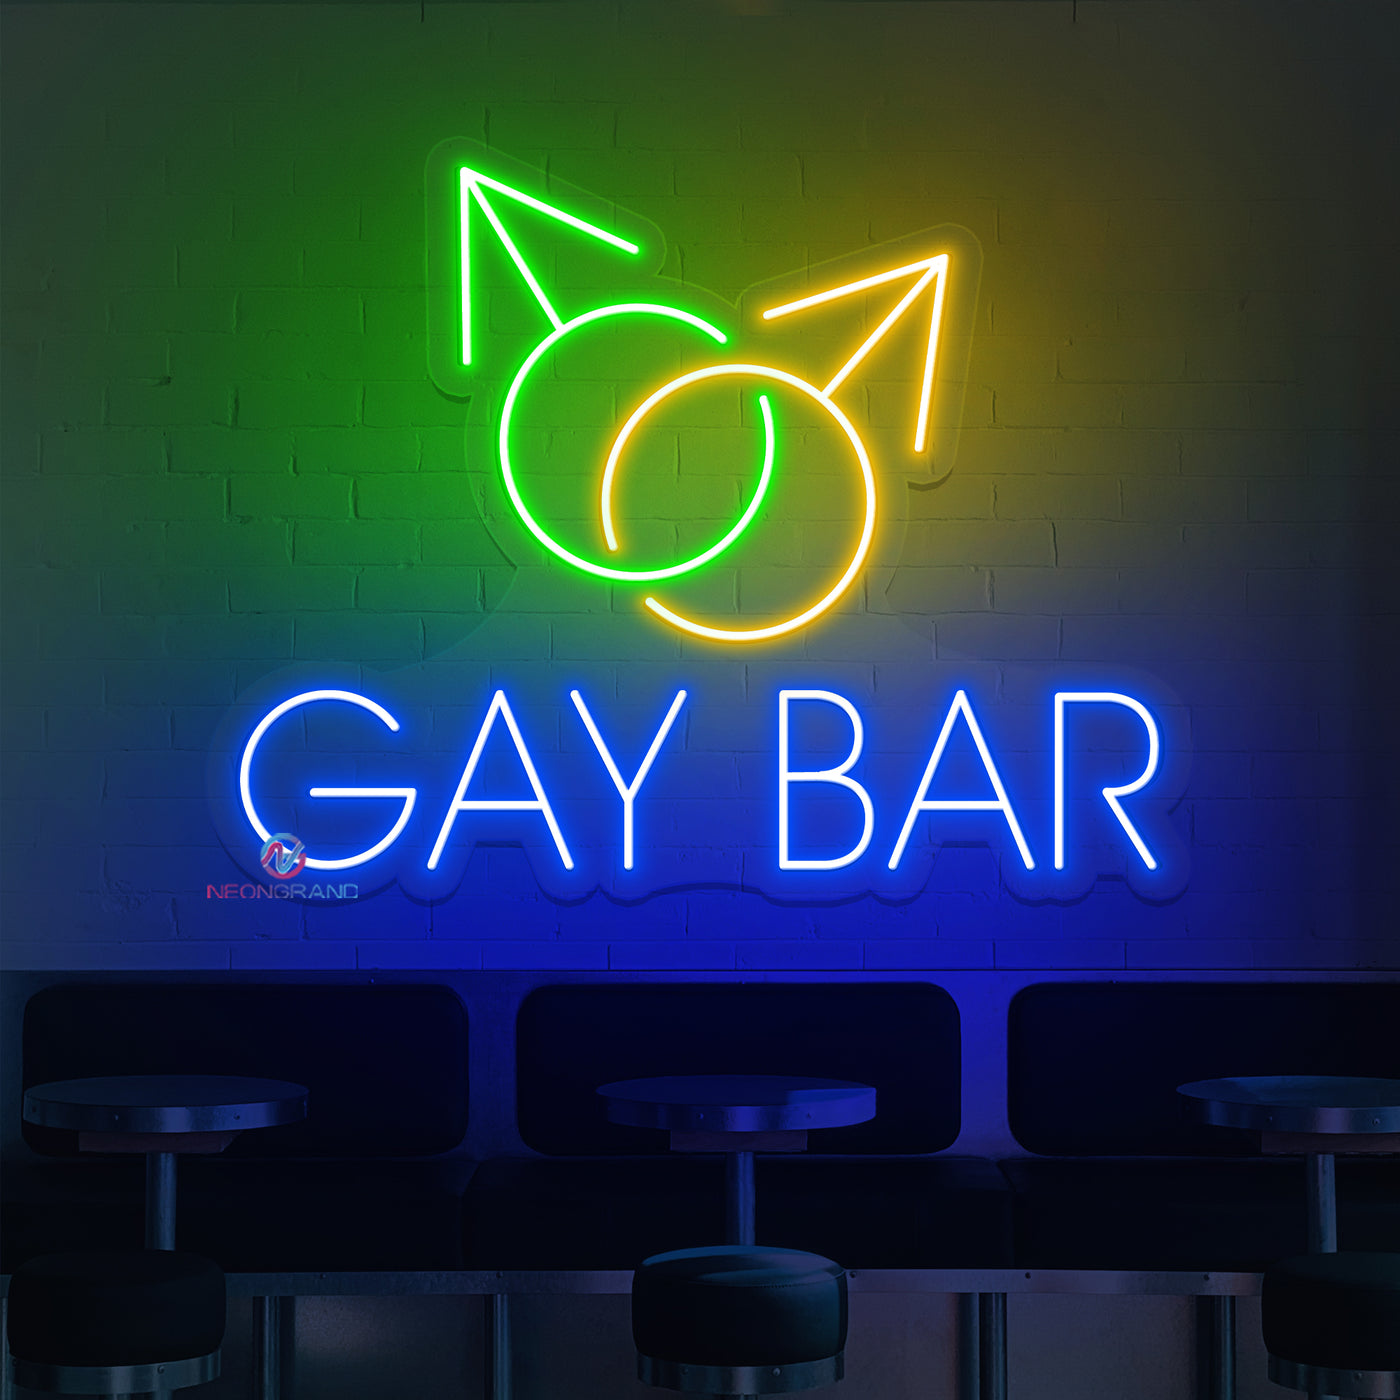 Gay Bar Neon Sign Led Light